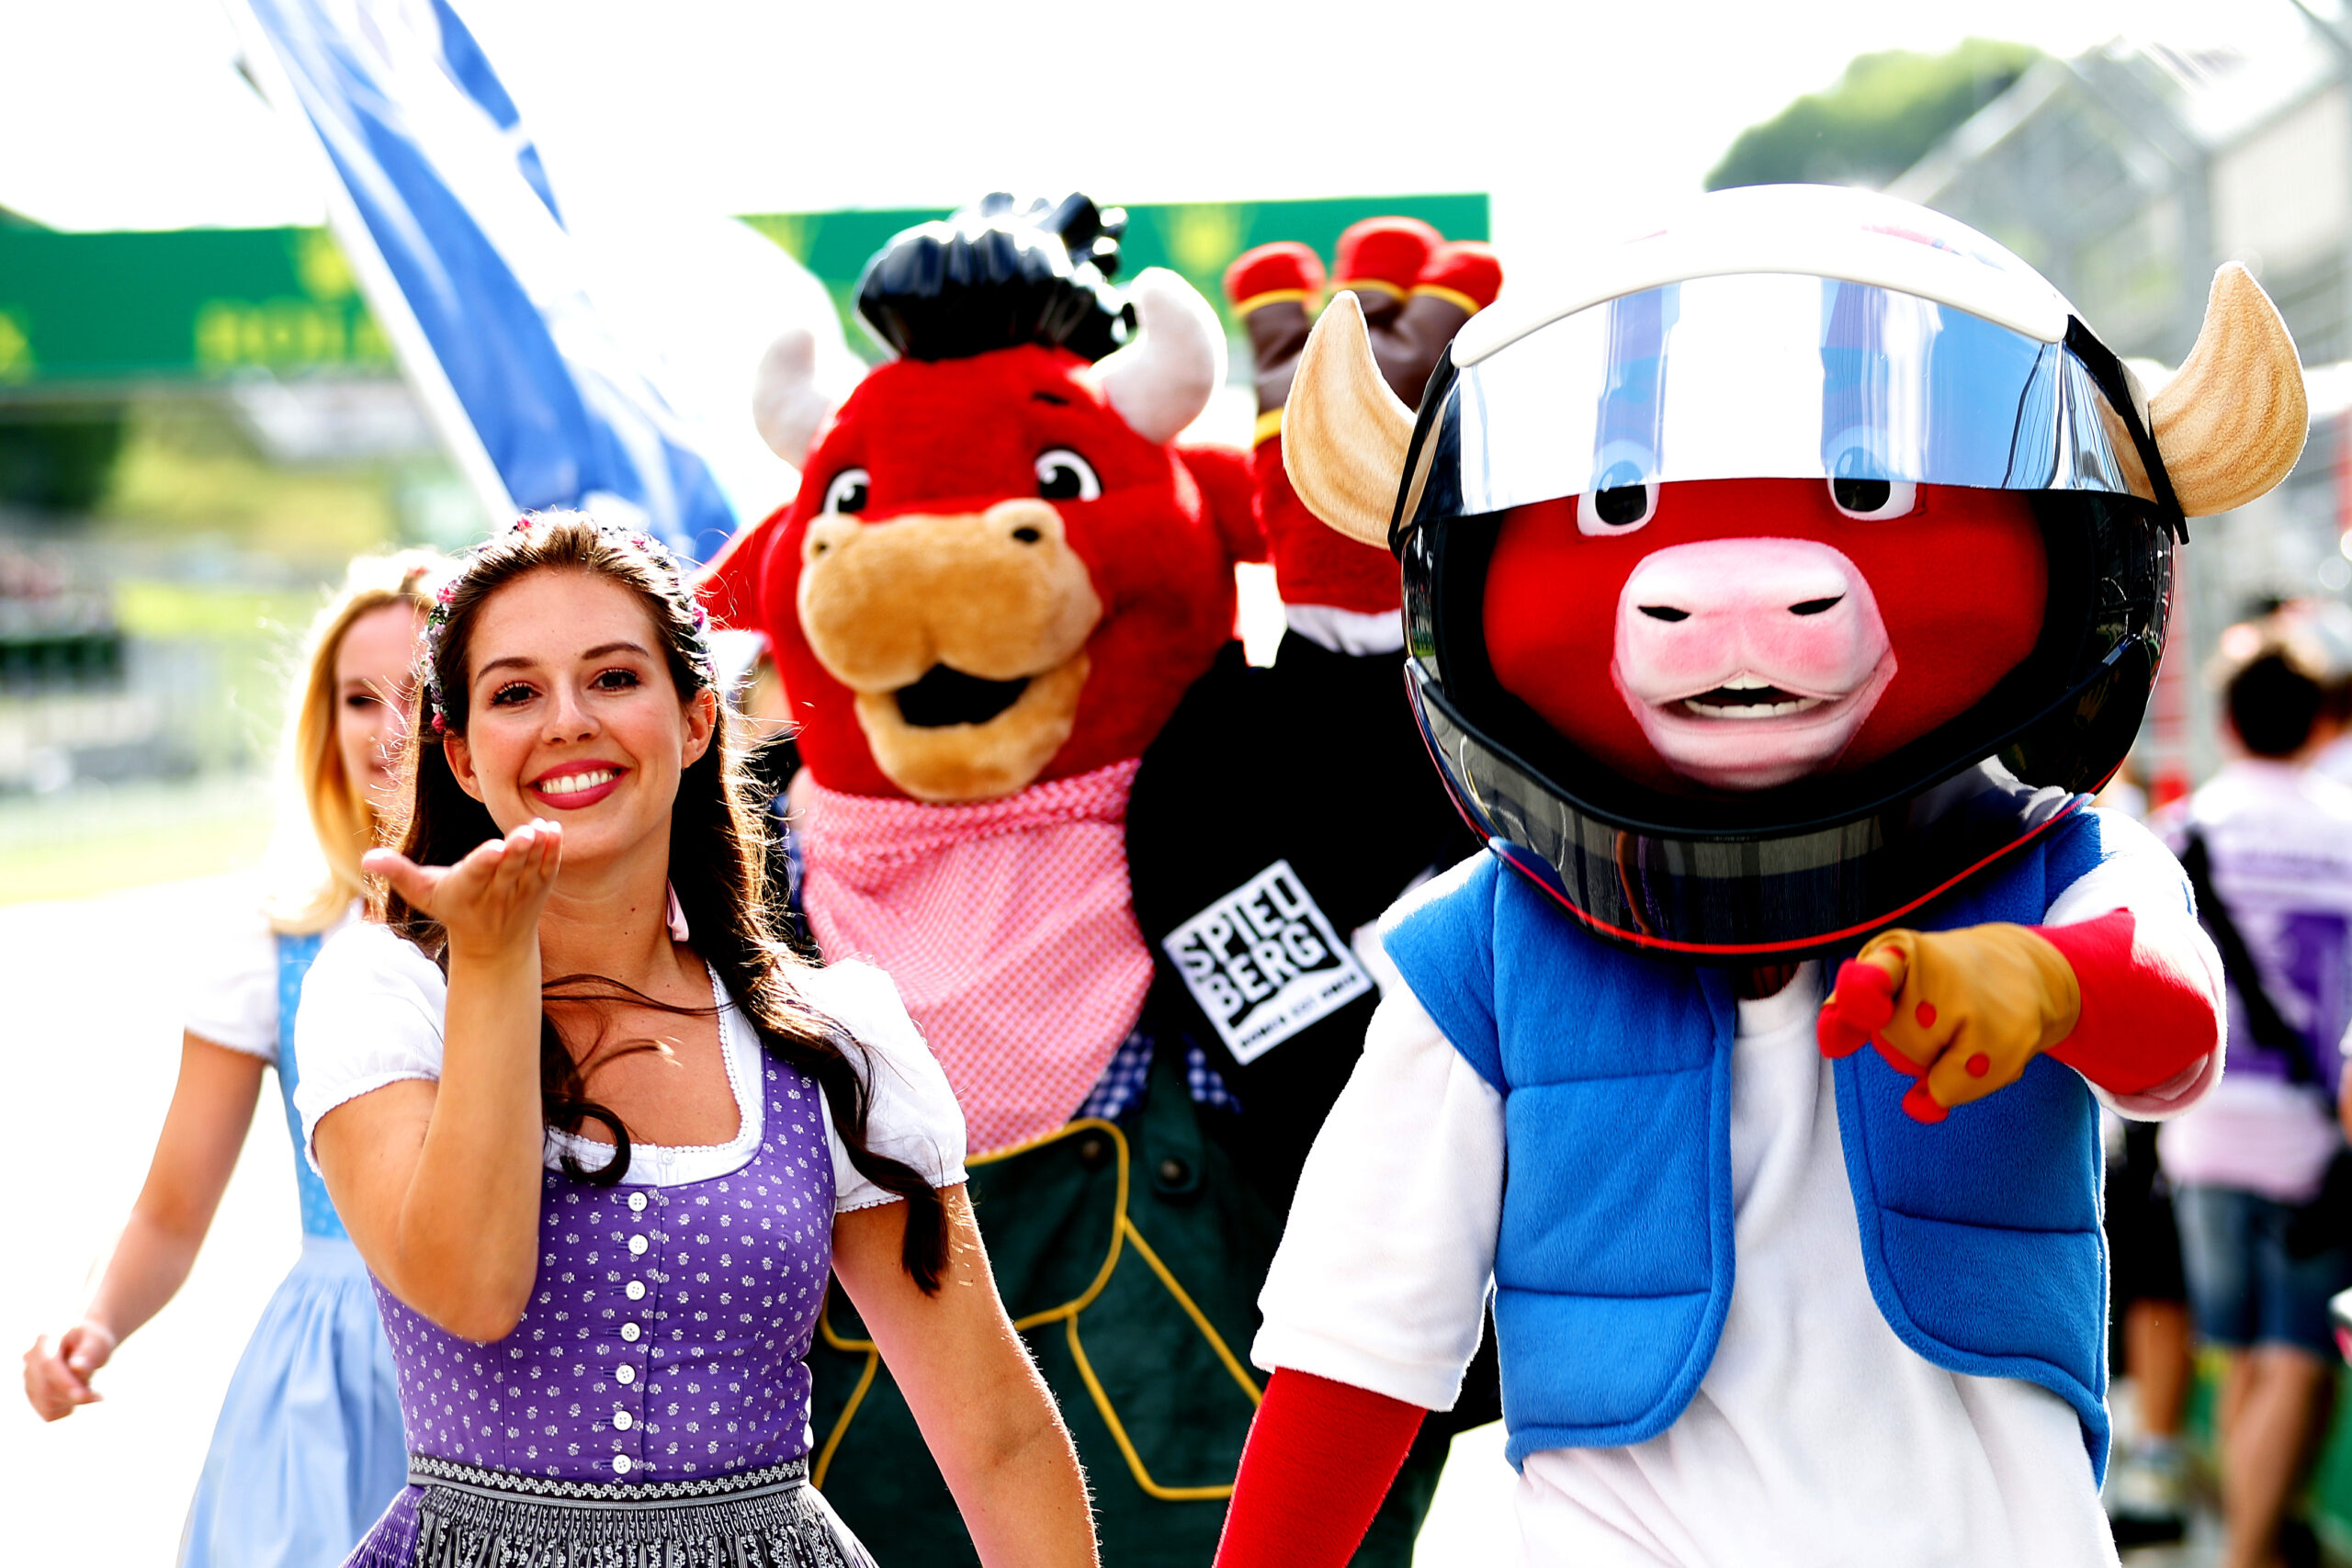 Models and mascots ahead of the Austrian Grand Prix